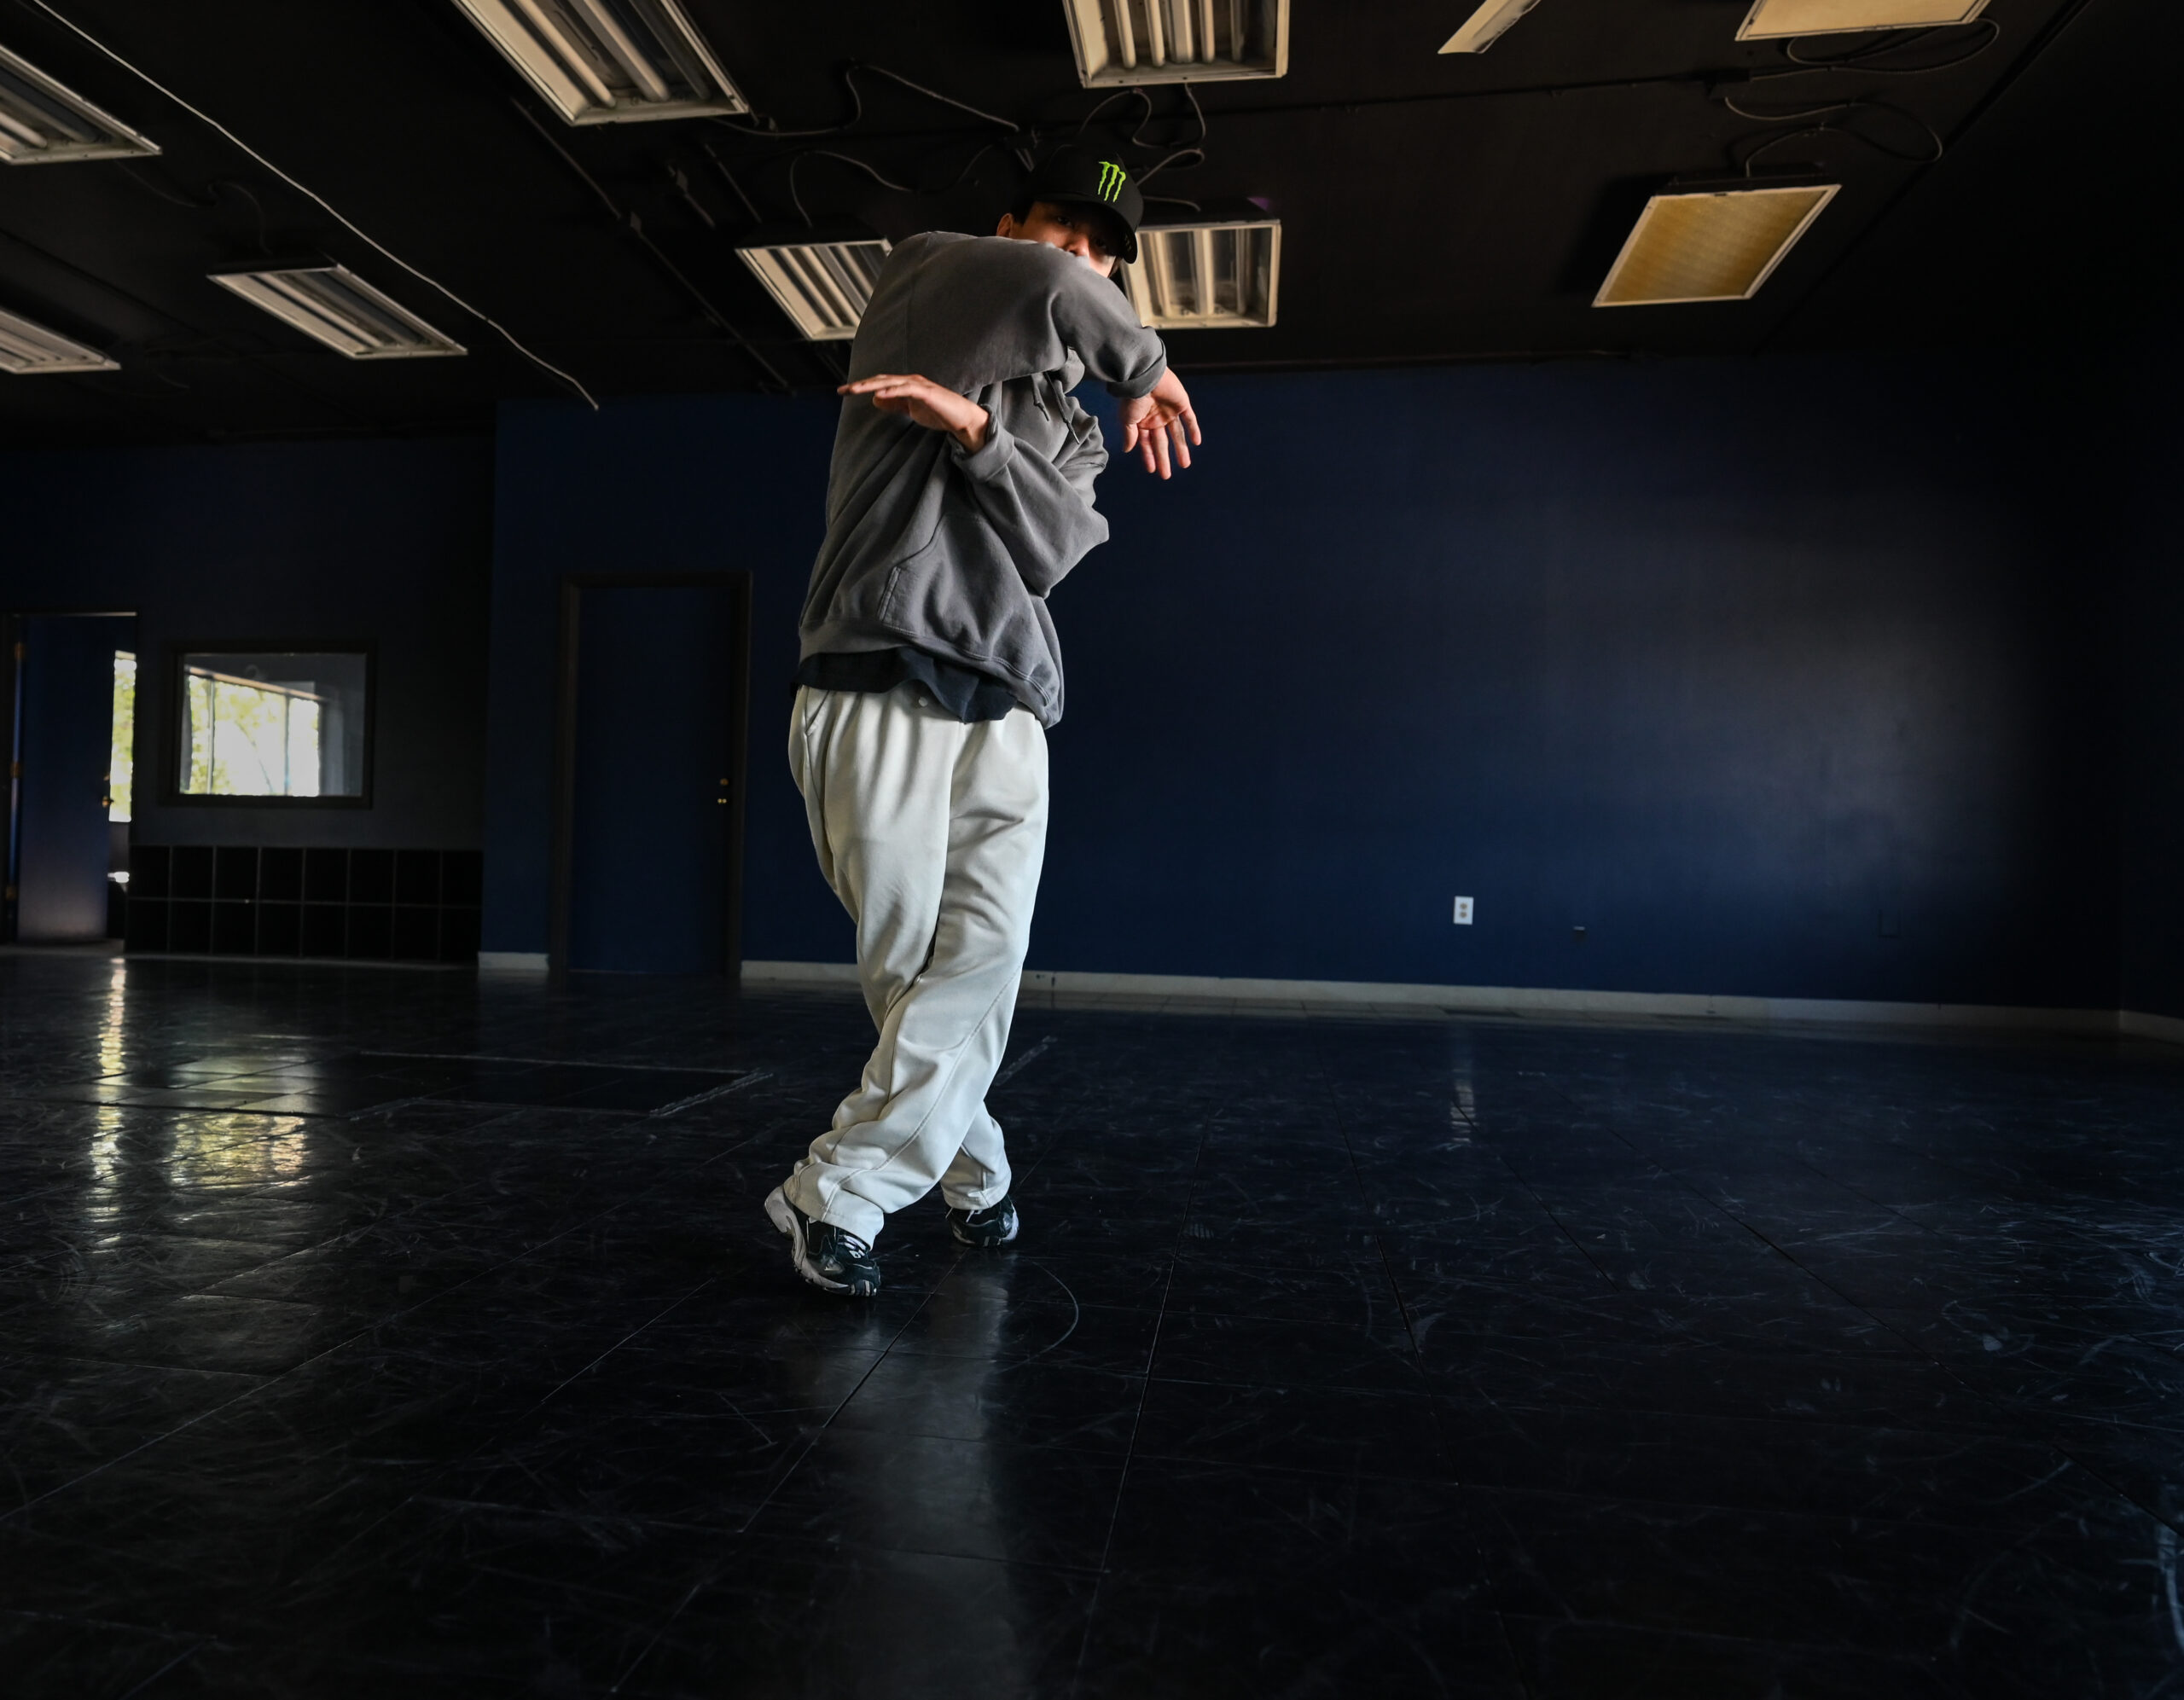 A break dancer practicing moves.